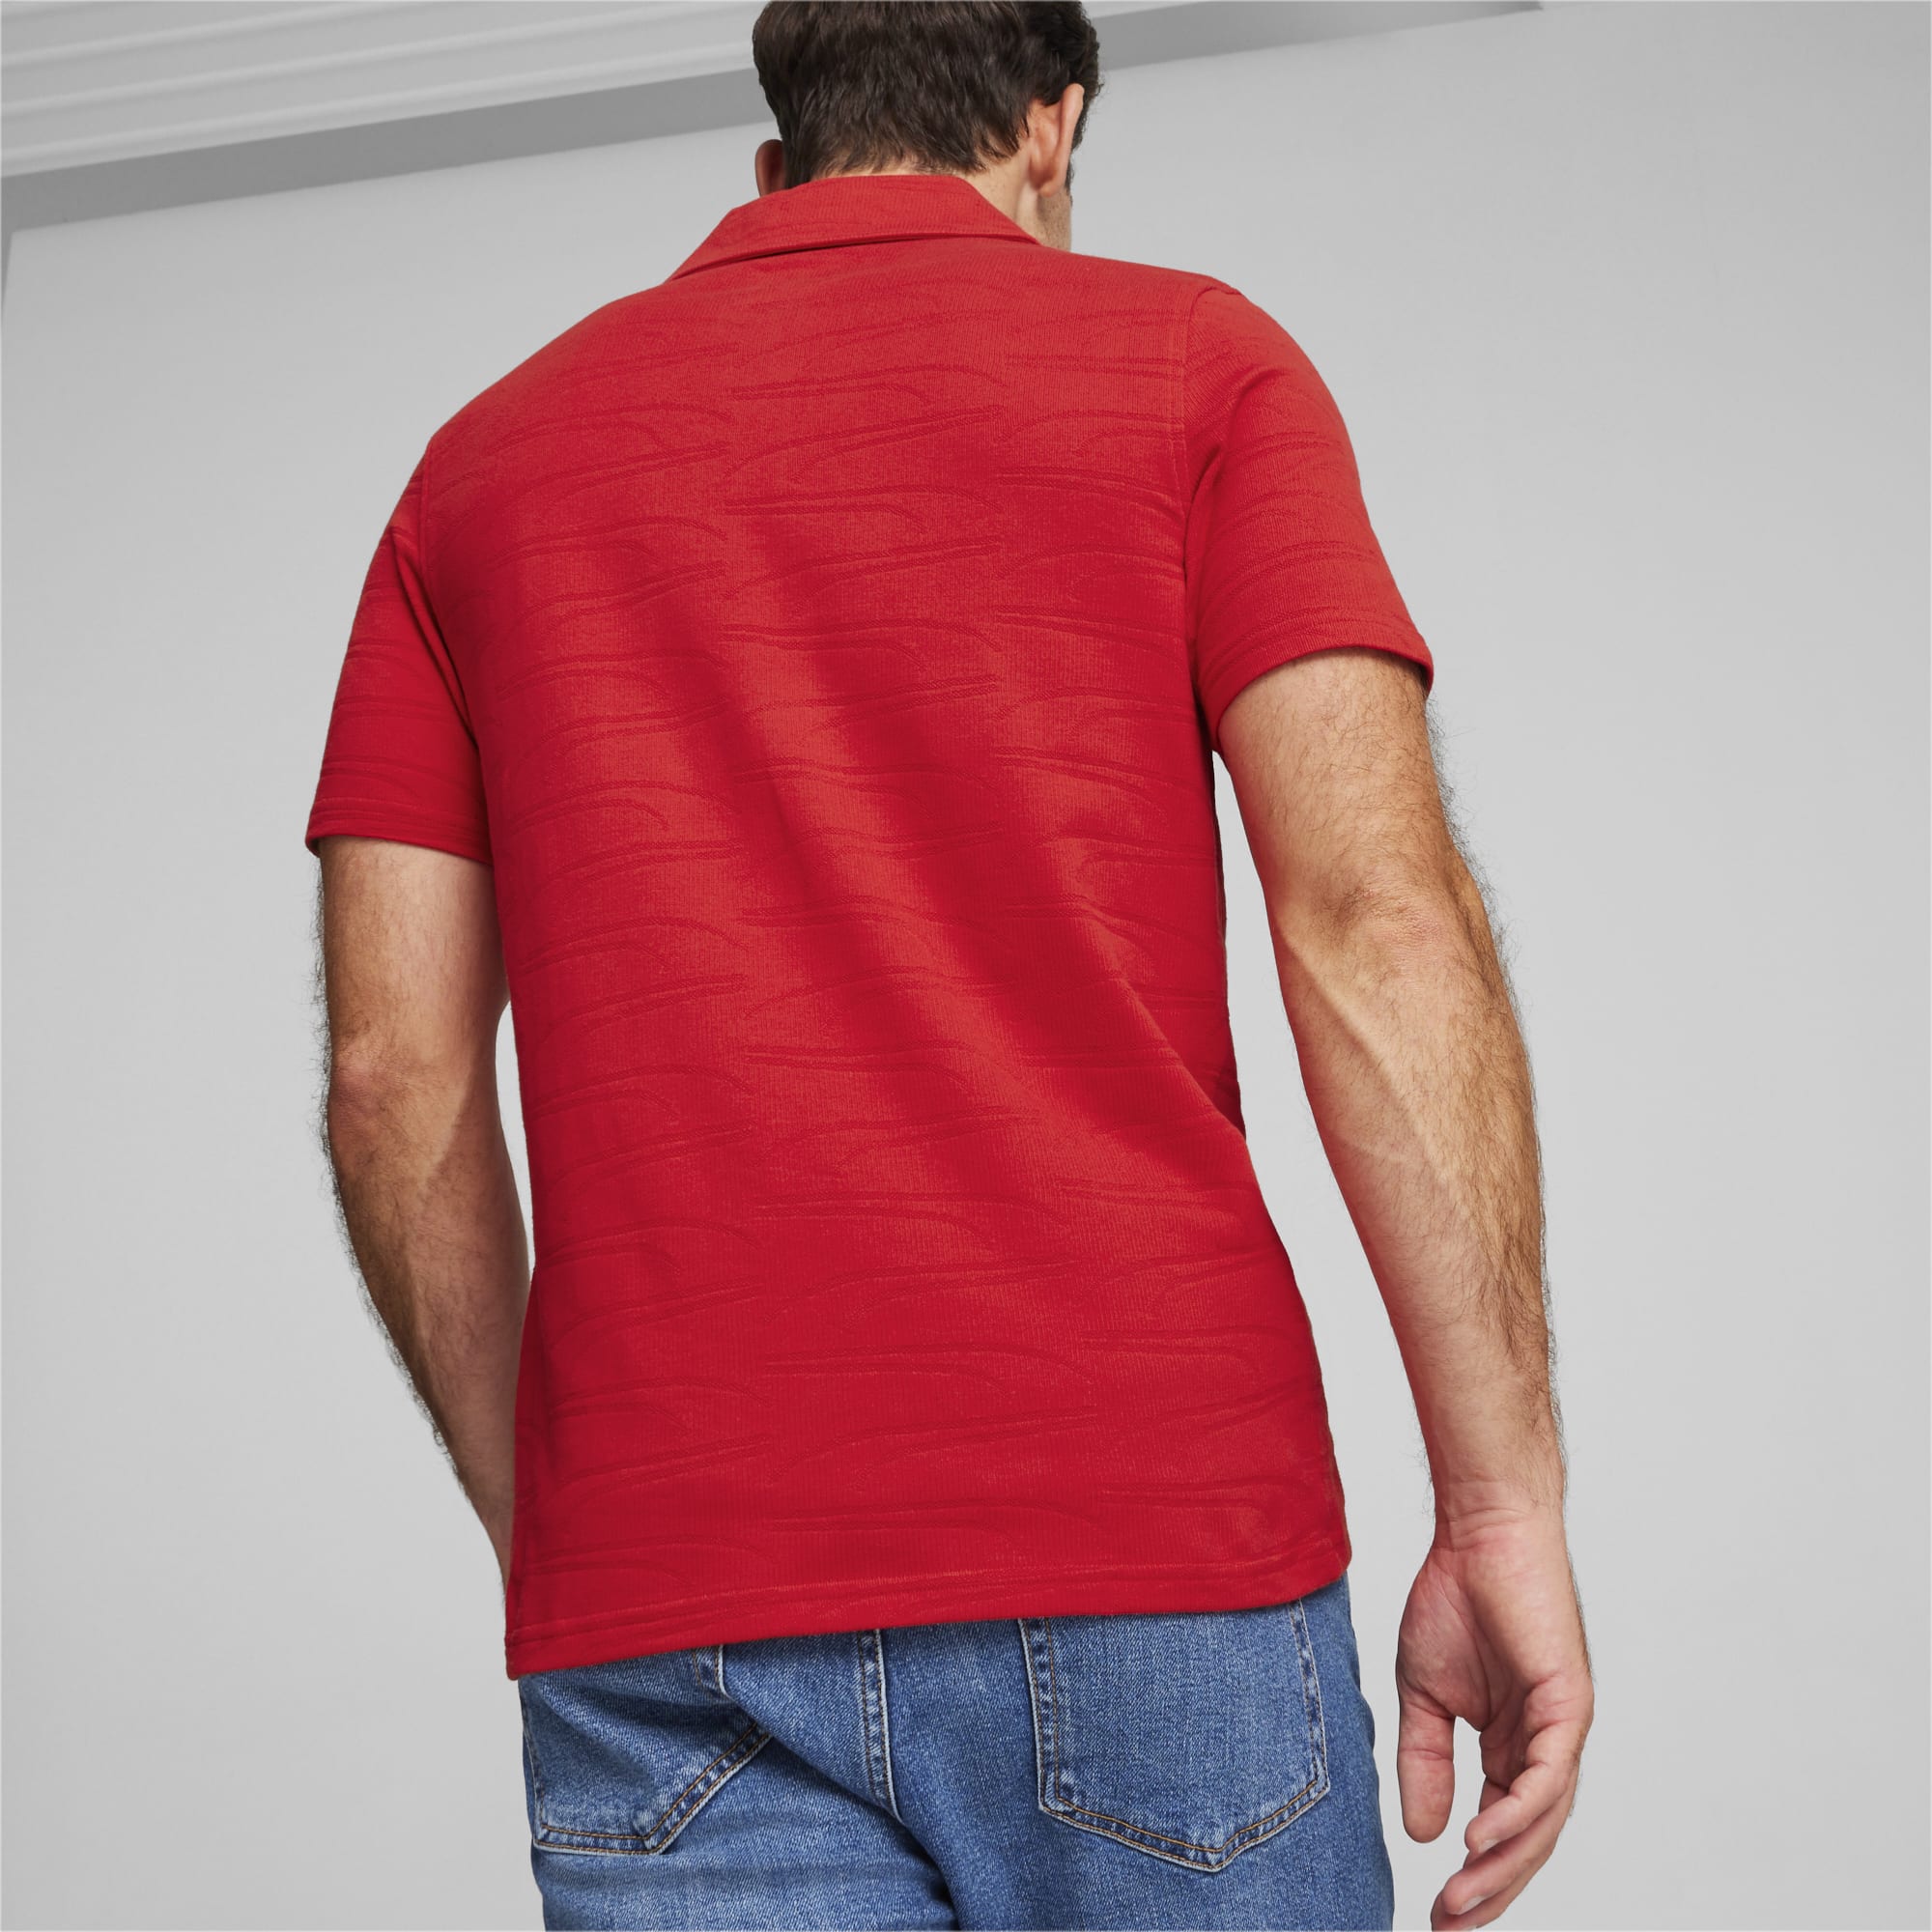 PUMA Scuderia Ferrari Style Men's Motorsport Jacquard Polo Shirt, Red, Size XS, Clothing